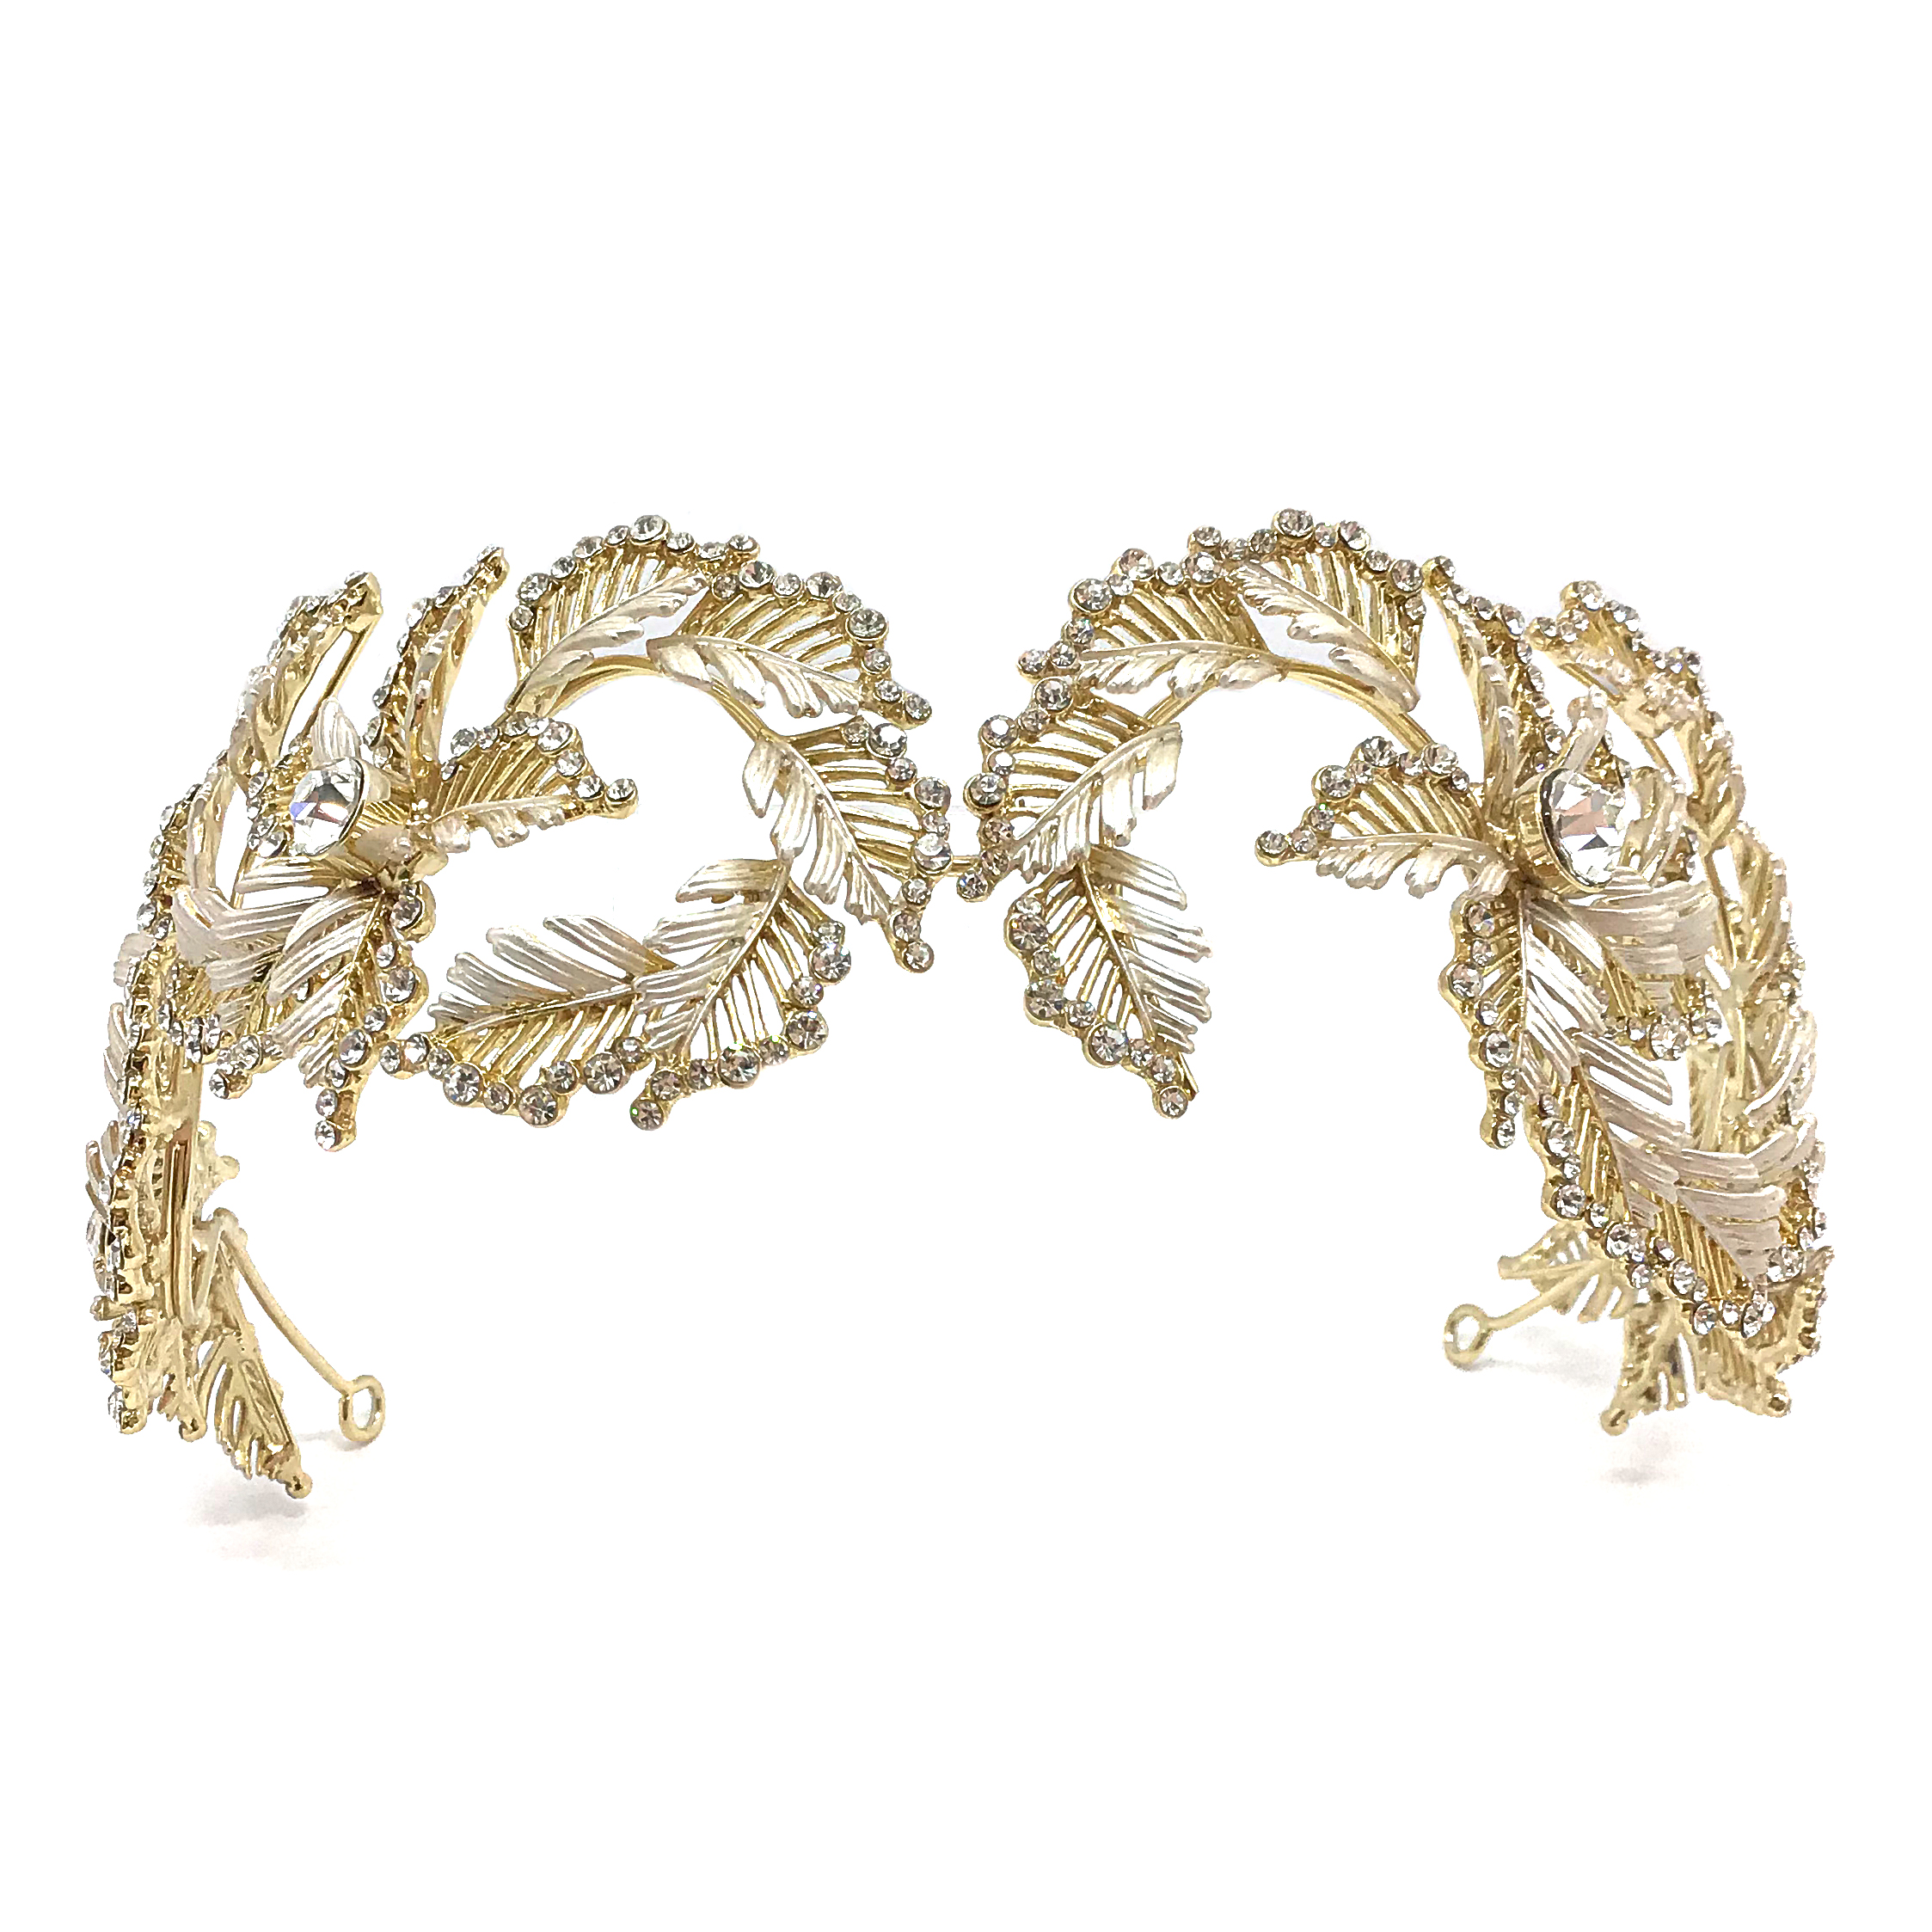 Gold Leaf Crown Headband|Layla|Jeanette Maree|Shop Online